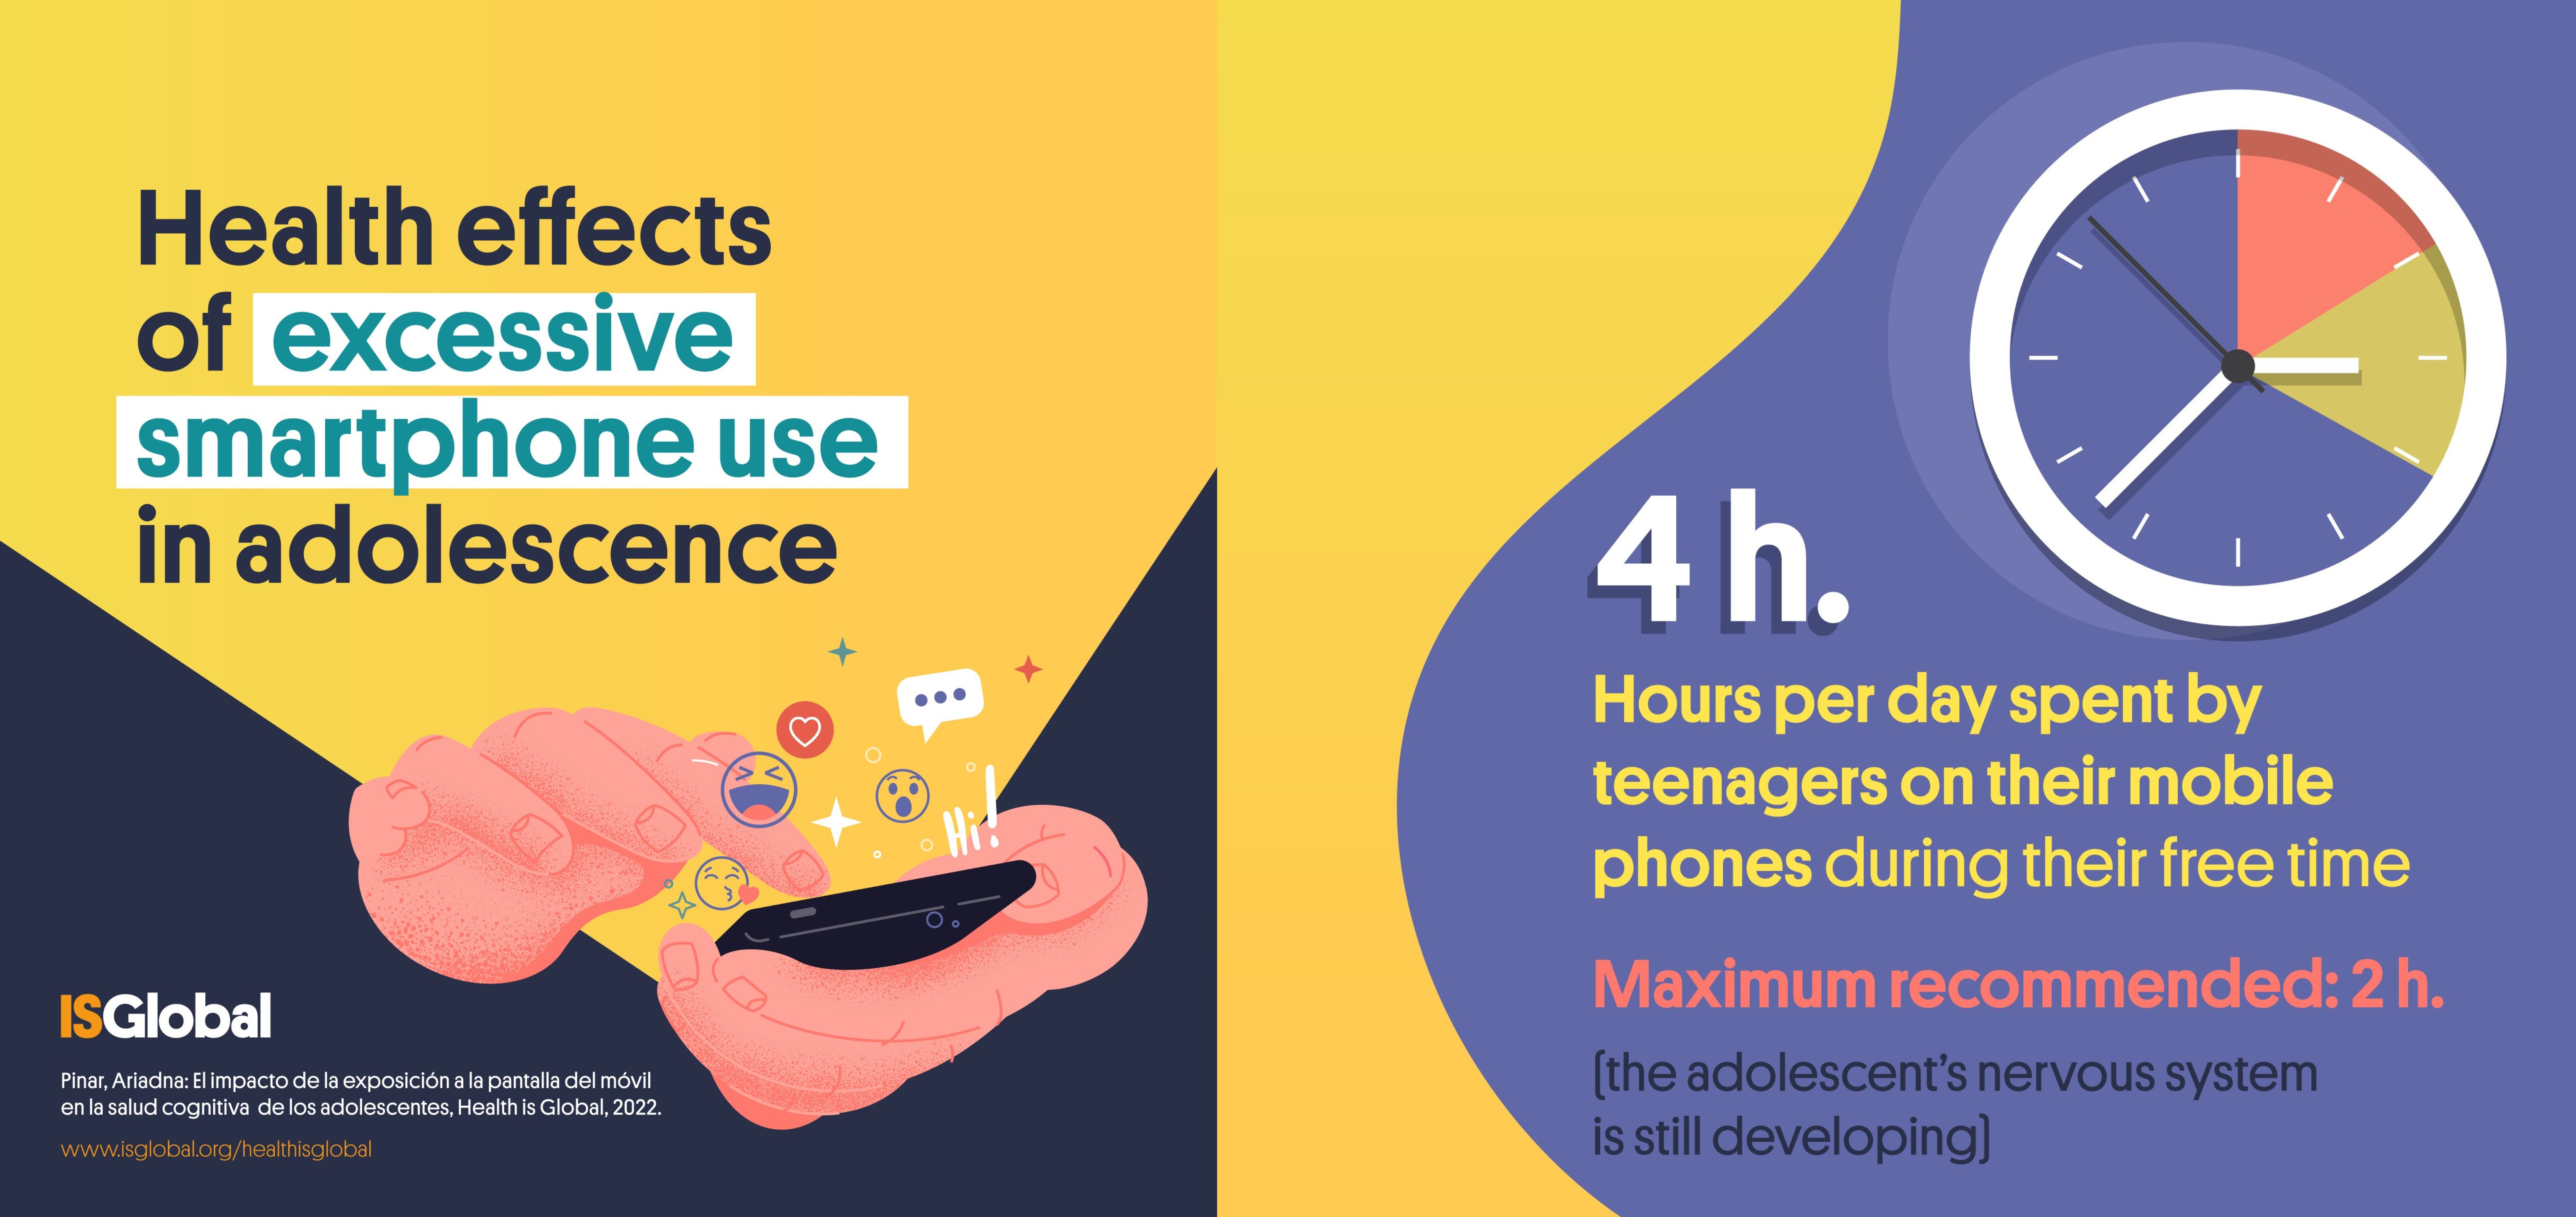 mobile phone teenagers health